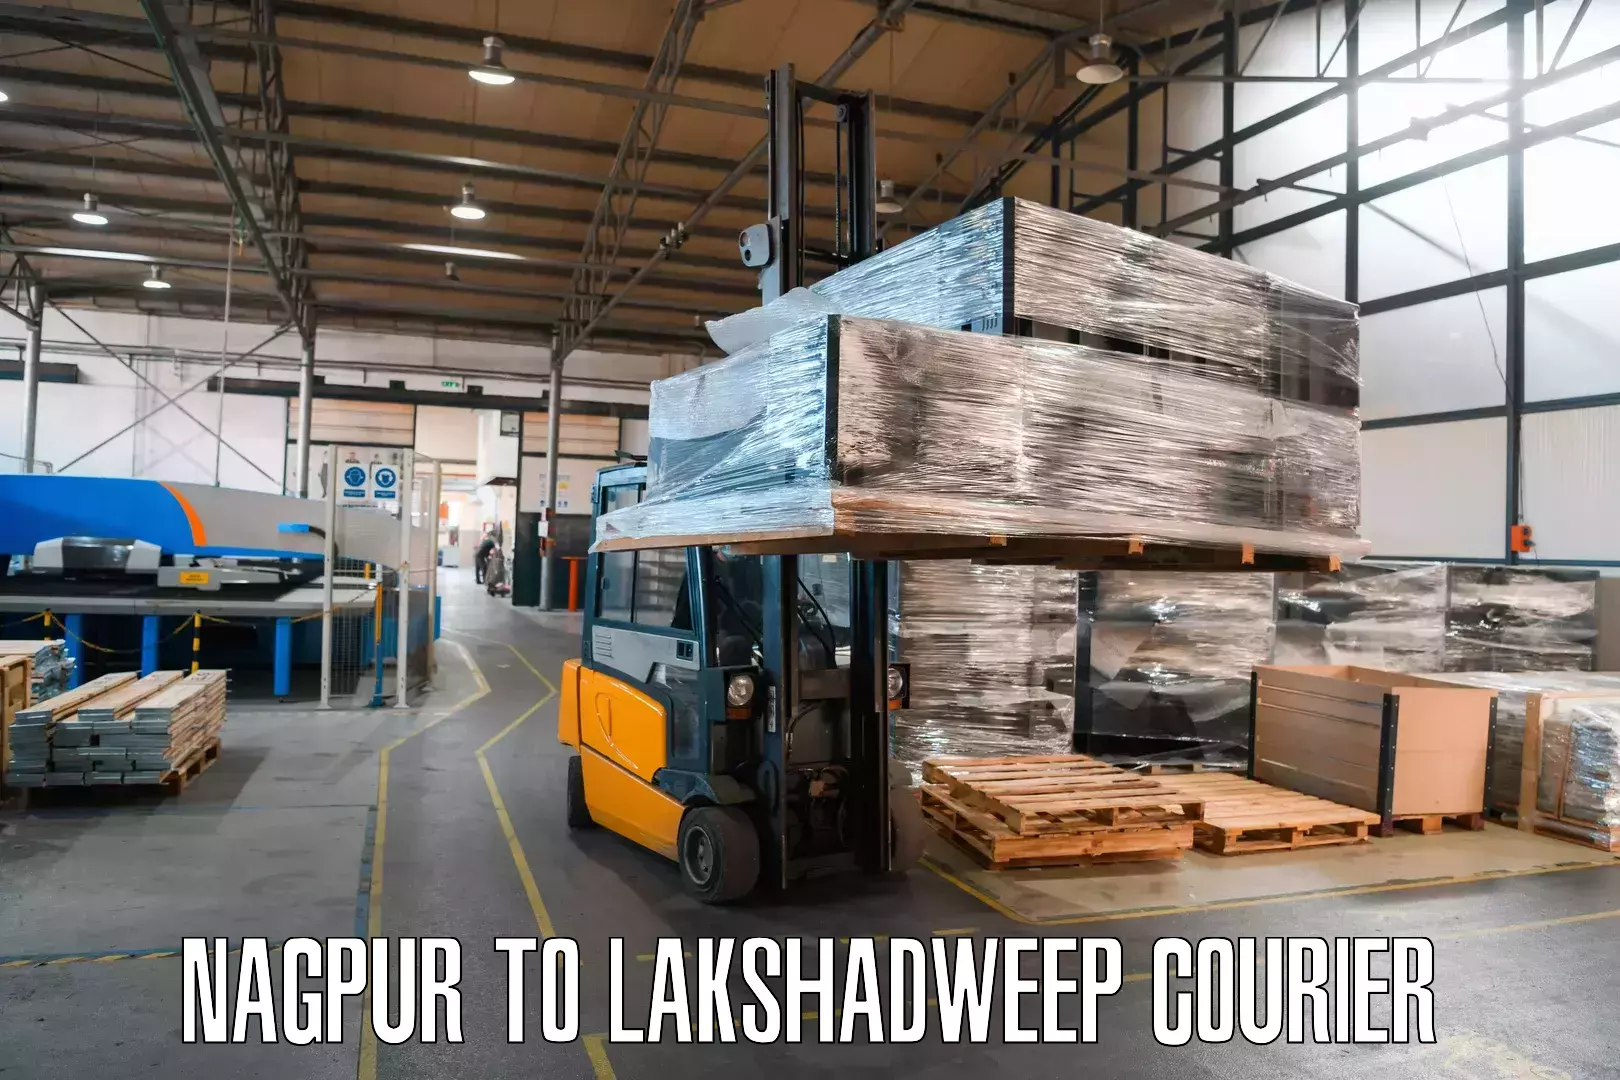 Global logistics network Nagpur to Lakshadweep